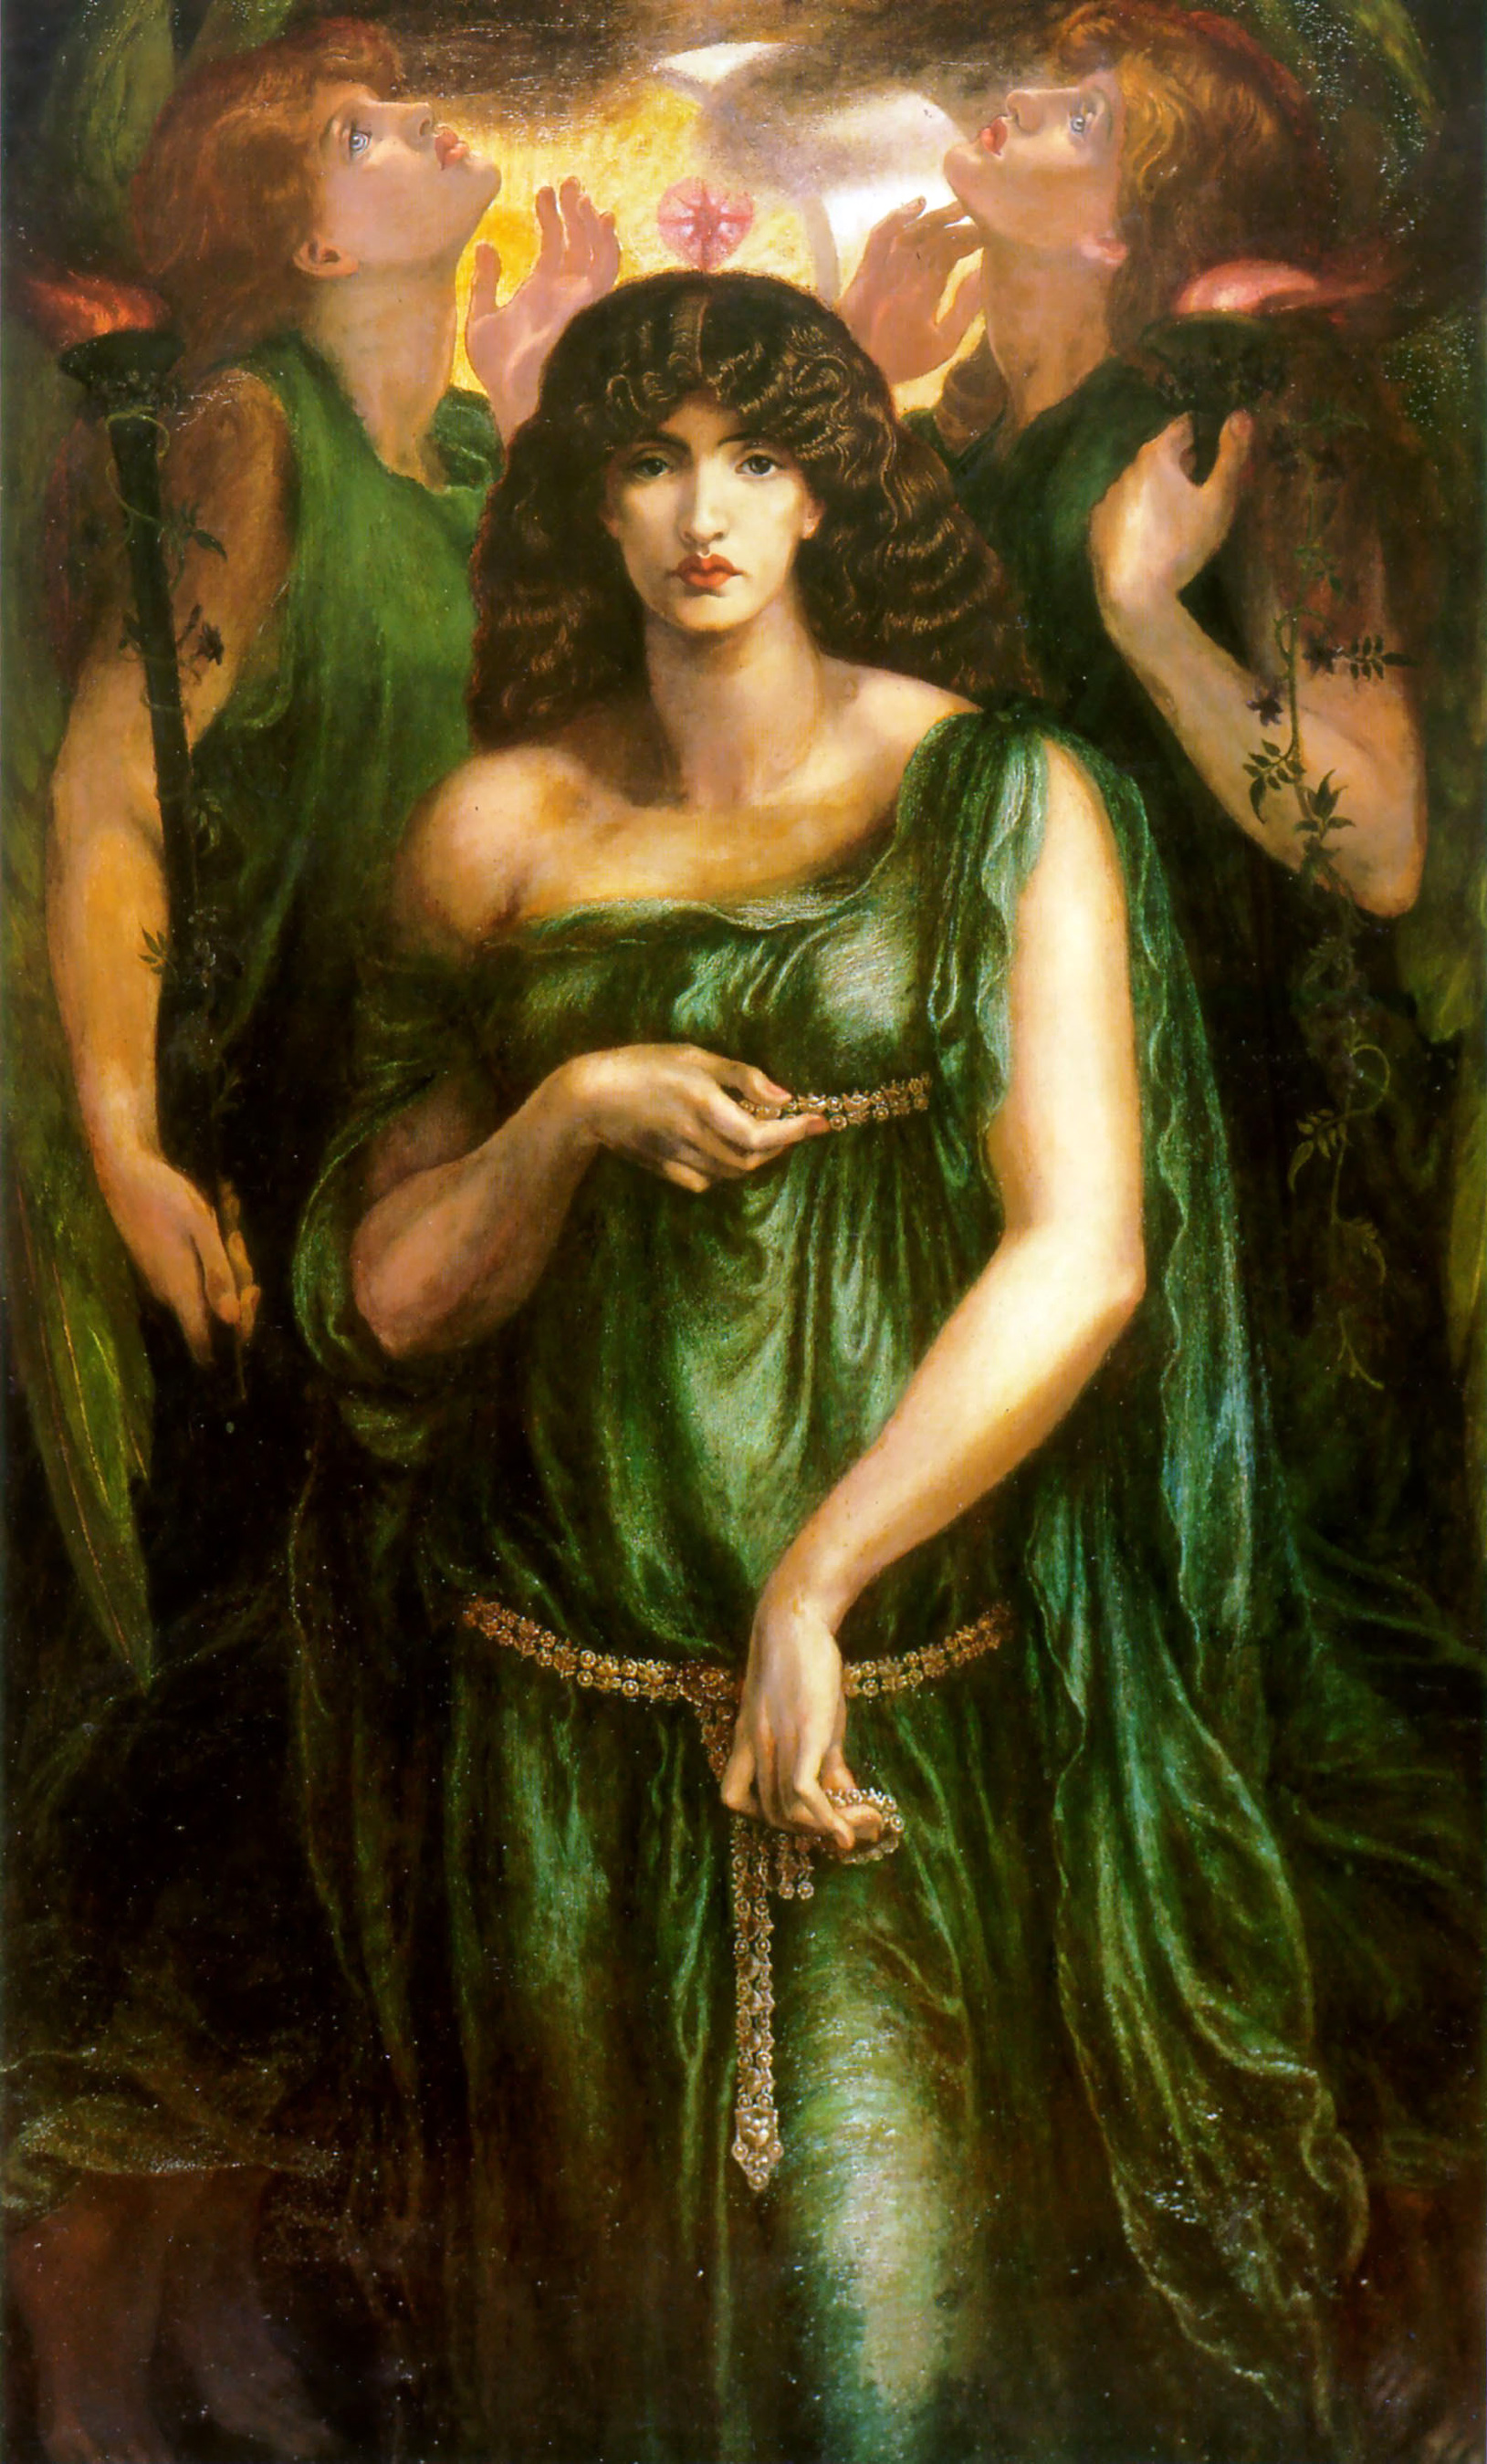 Astarte Syriaca by Dante Gabriel Rossetti - 1877 - 185 x 109 cm Manchester Art Gallery